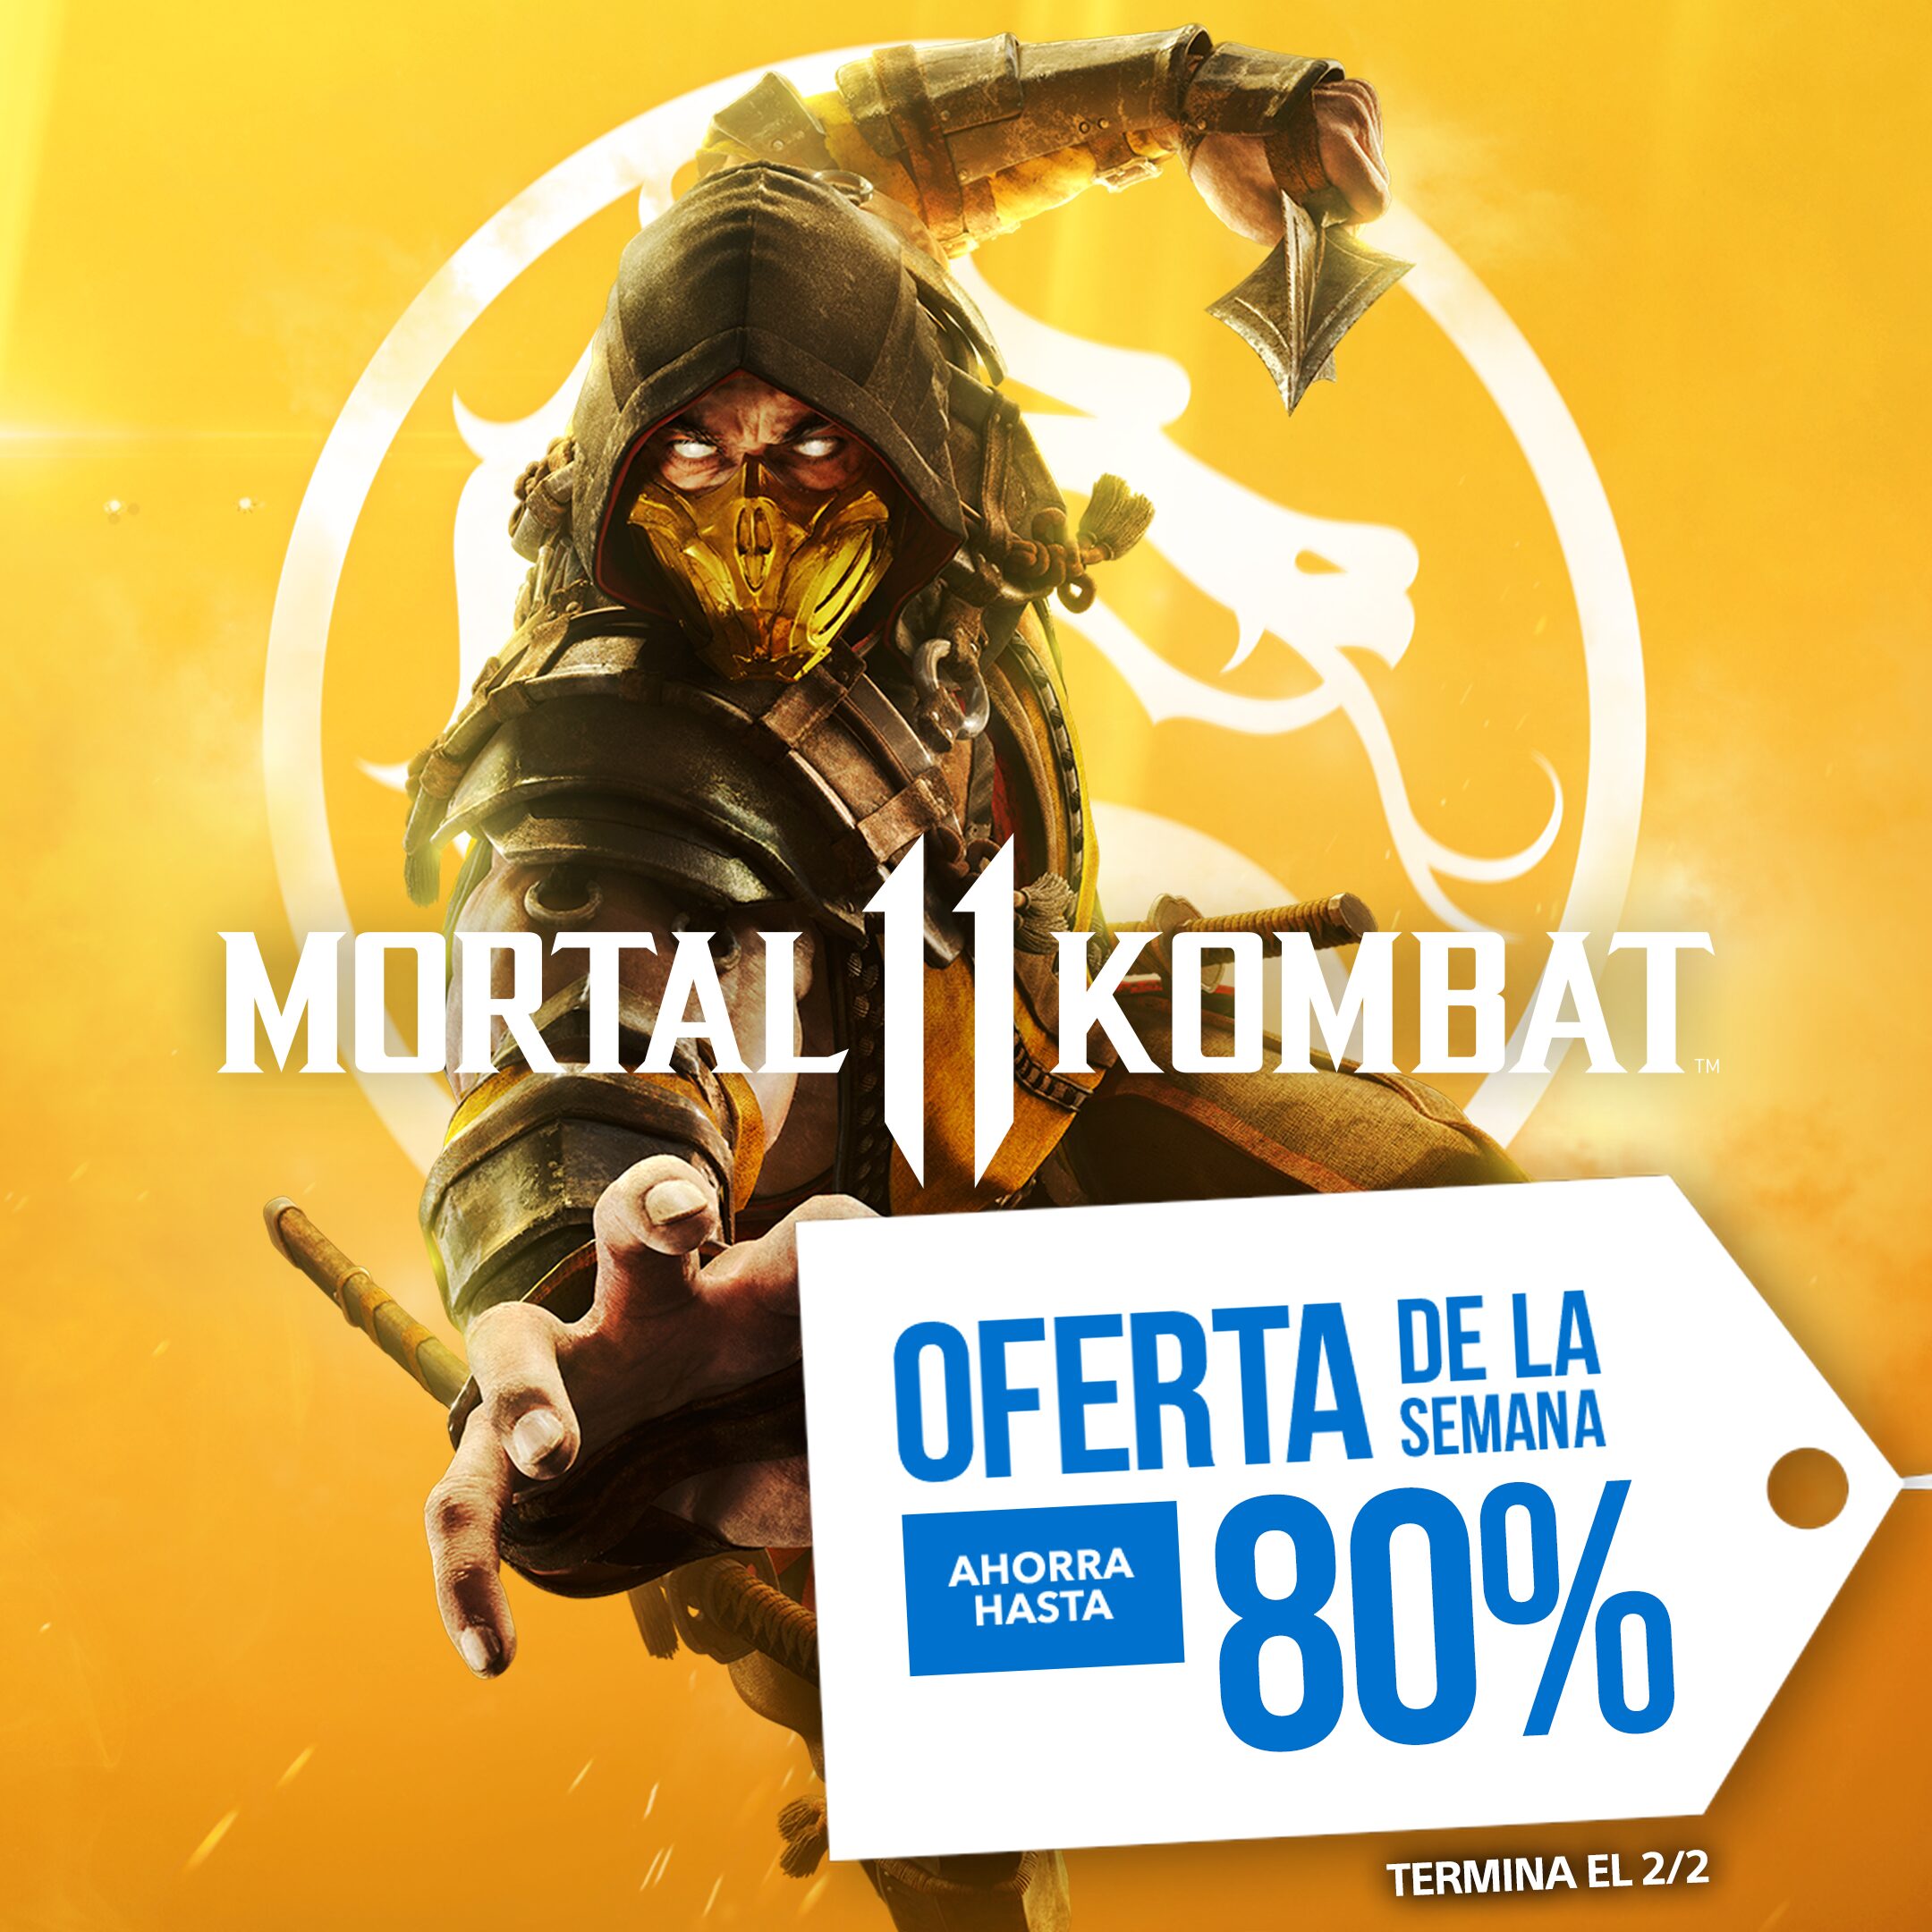 [PROMO] Deal Of The Week - Mortal Kombat 11